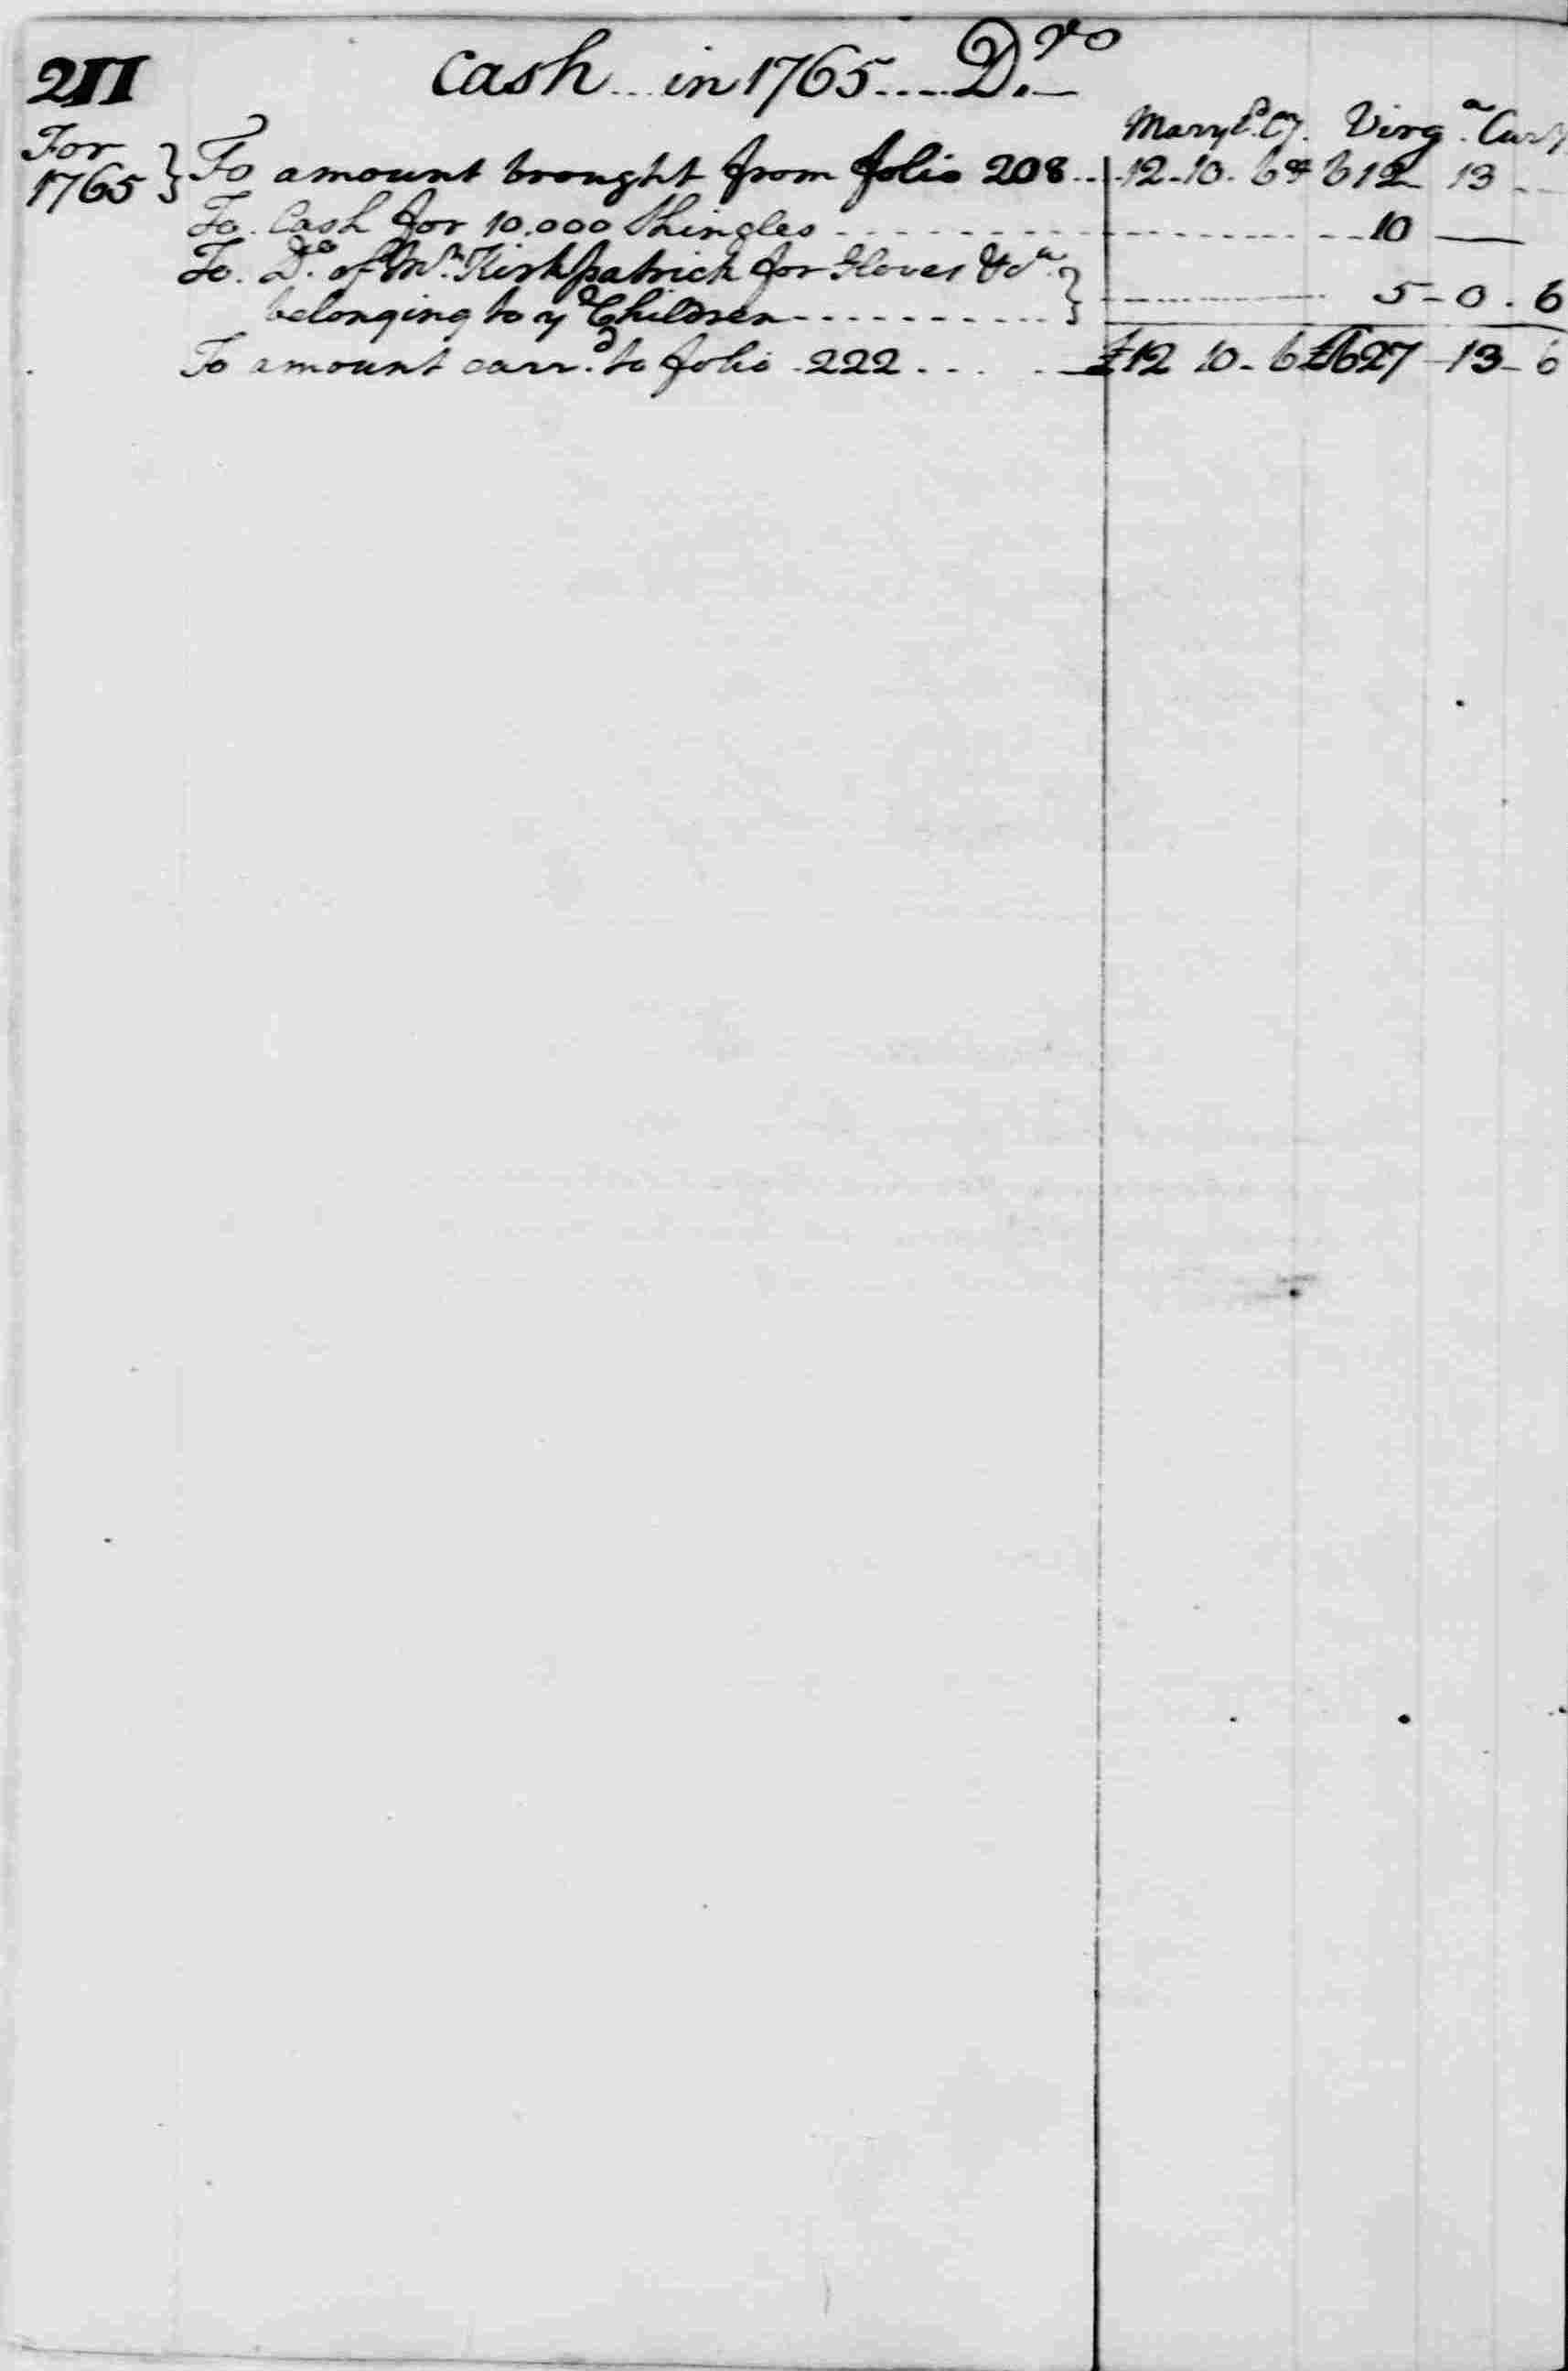 Ledger A, folio 211, left side